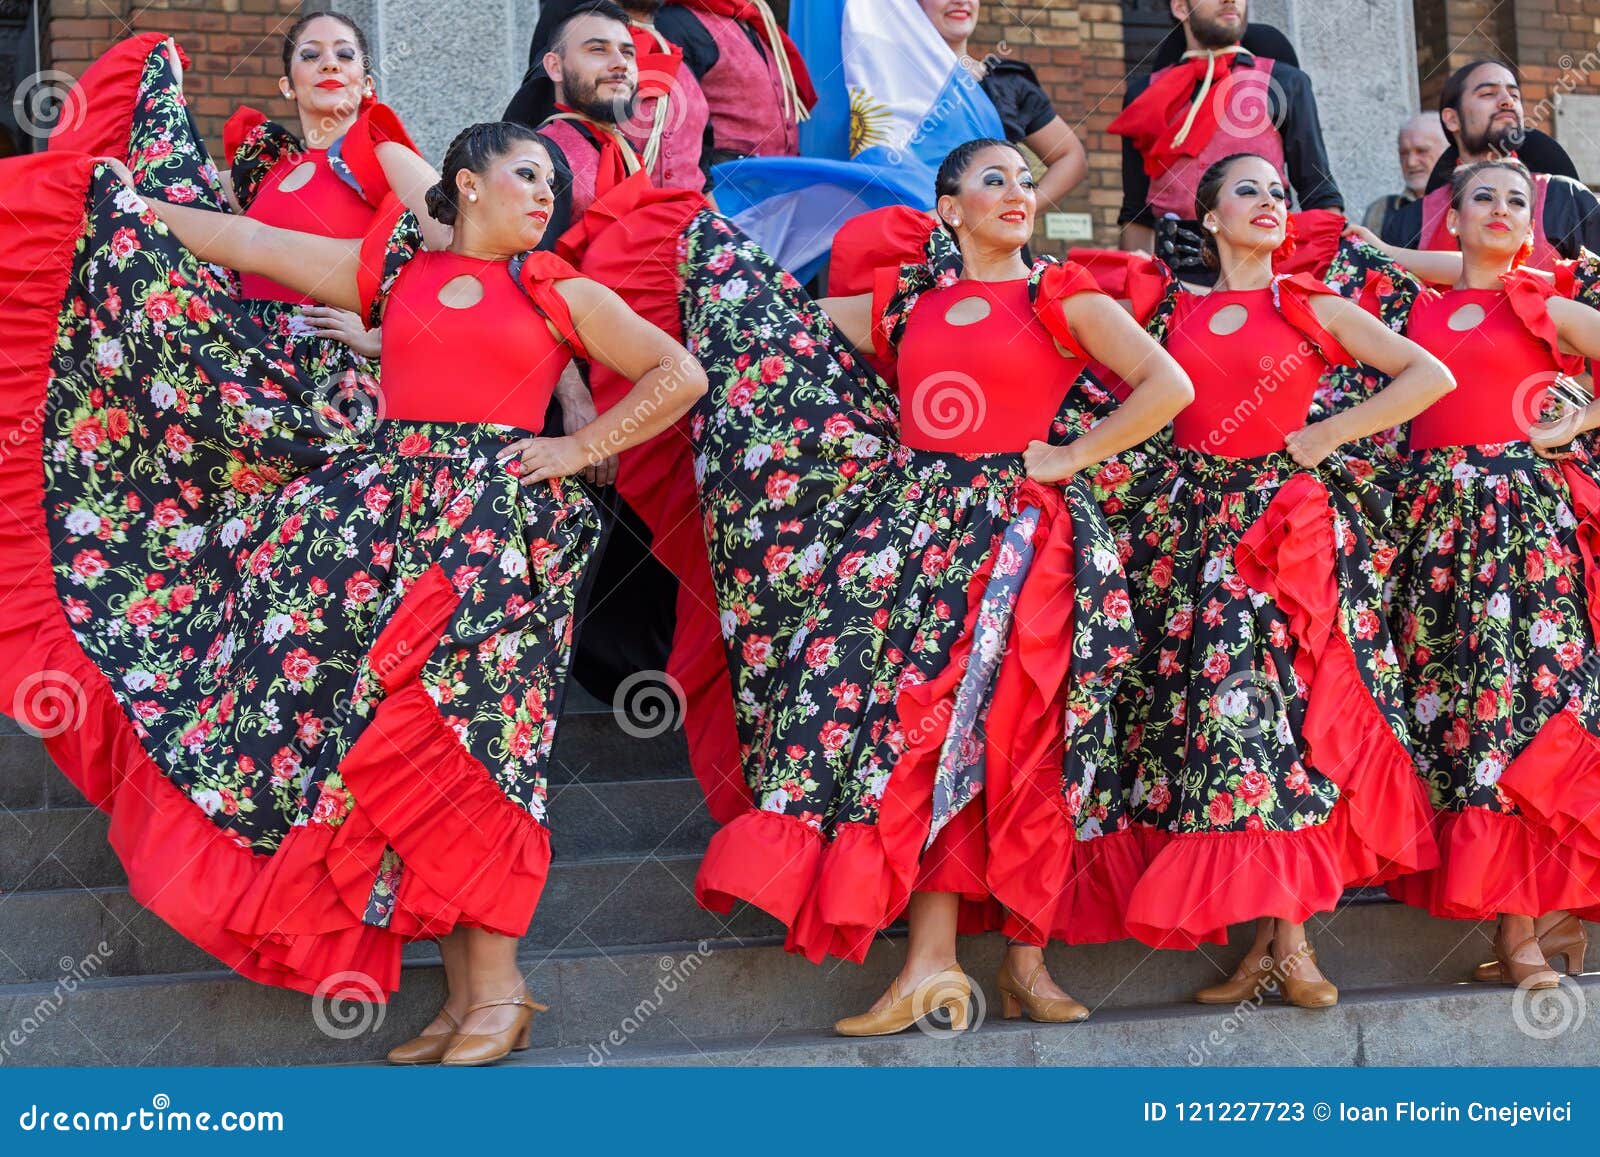 argentina traditional costume